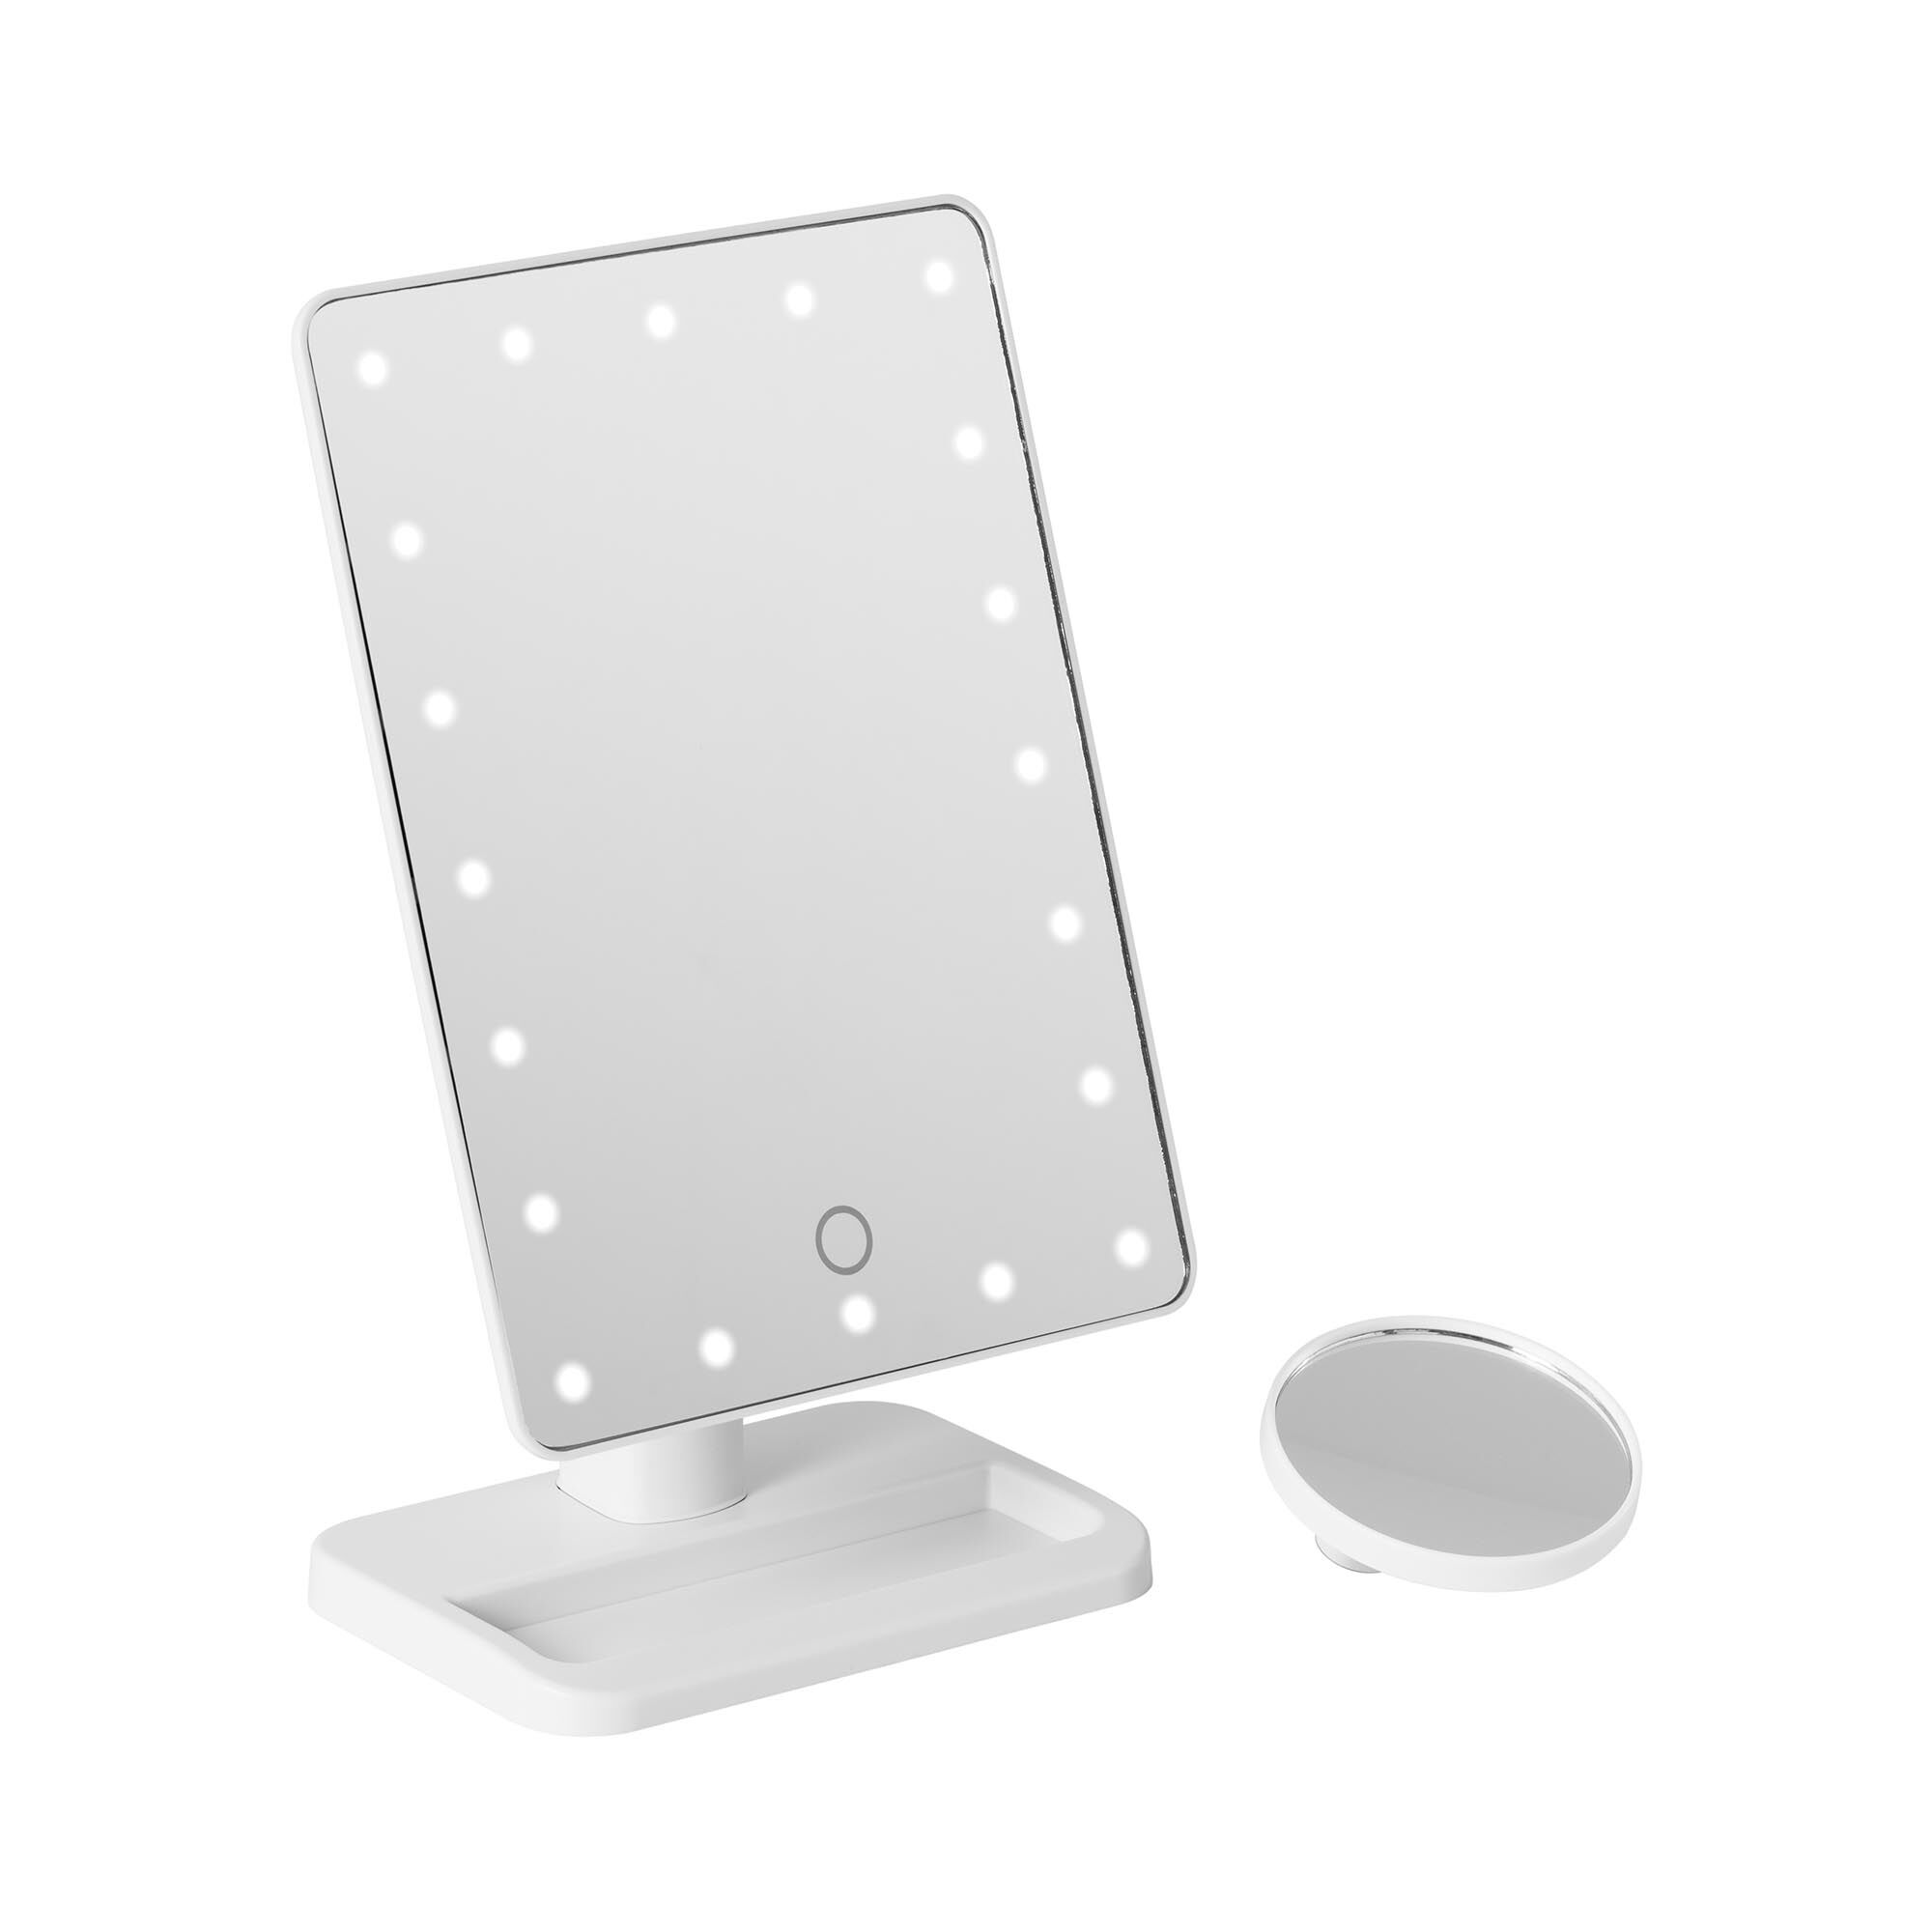 physa LED Vanity Mirror - white - 10x magnification - 20 LEDs - square - speaker